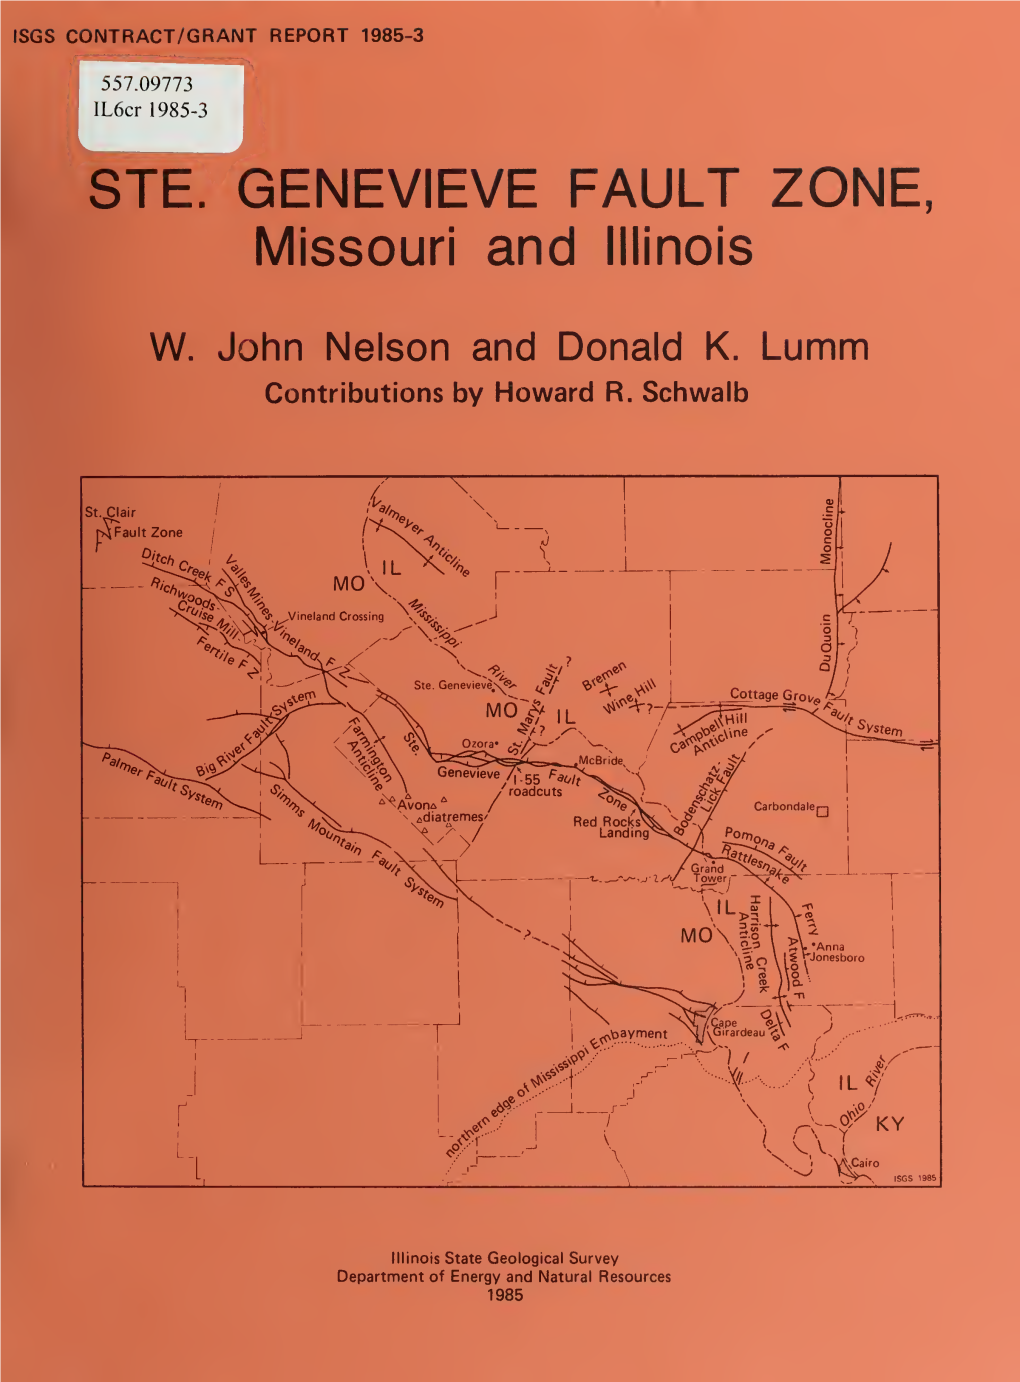 STE. GENEVIEVE FAULT ZONE, Missouri and Illinois